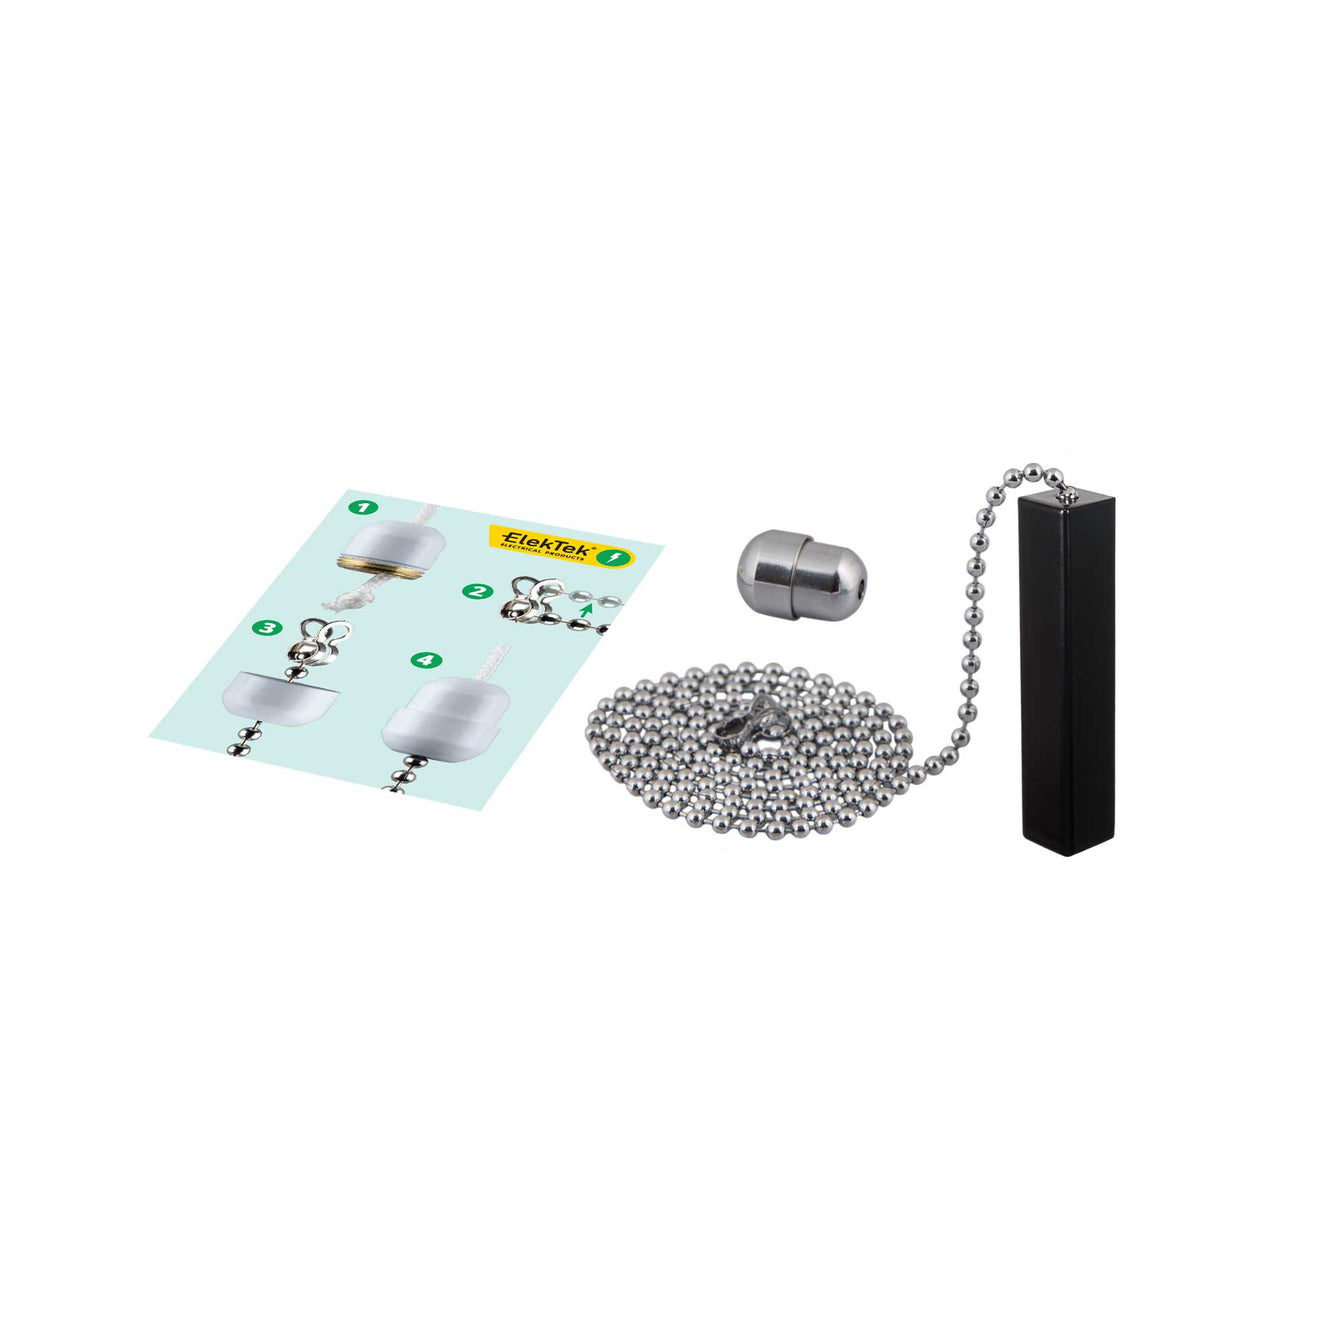 ElekTek Premium Black Bathroom Light Pull Cord Switch Kit with Pull Chain Handle Black Crystal Ball / Chrome